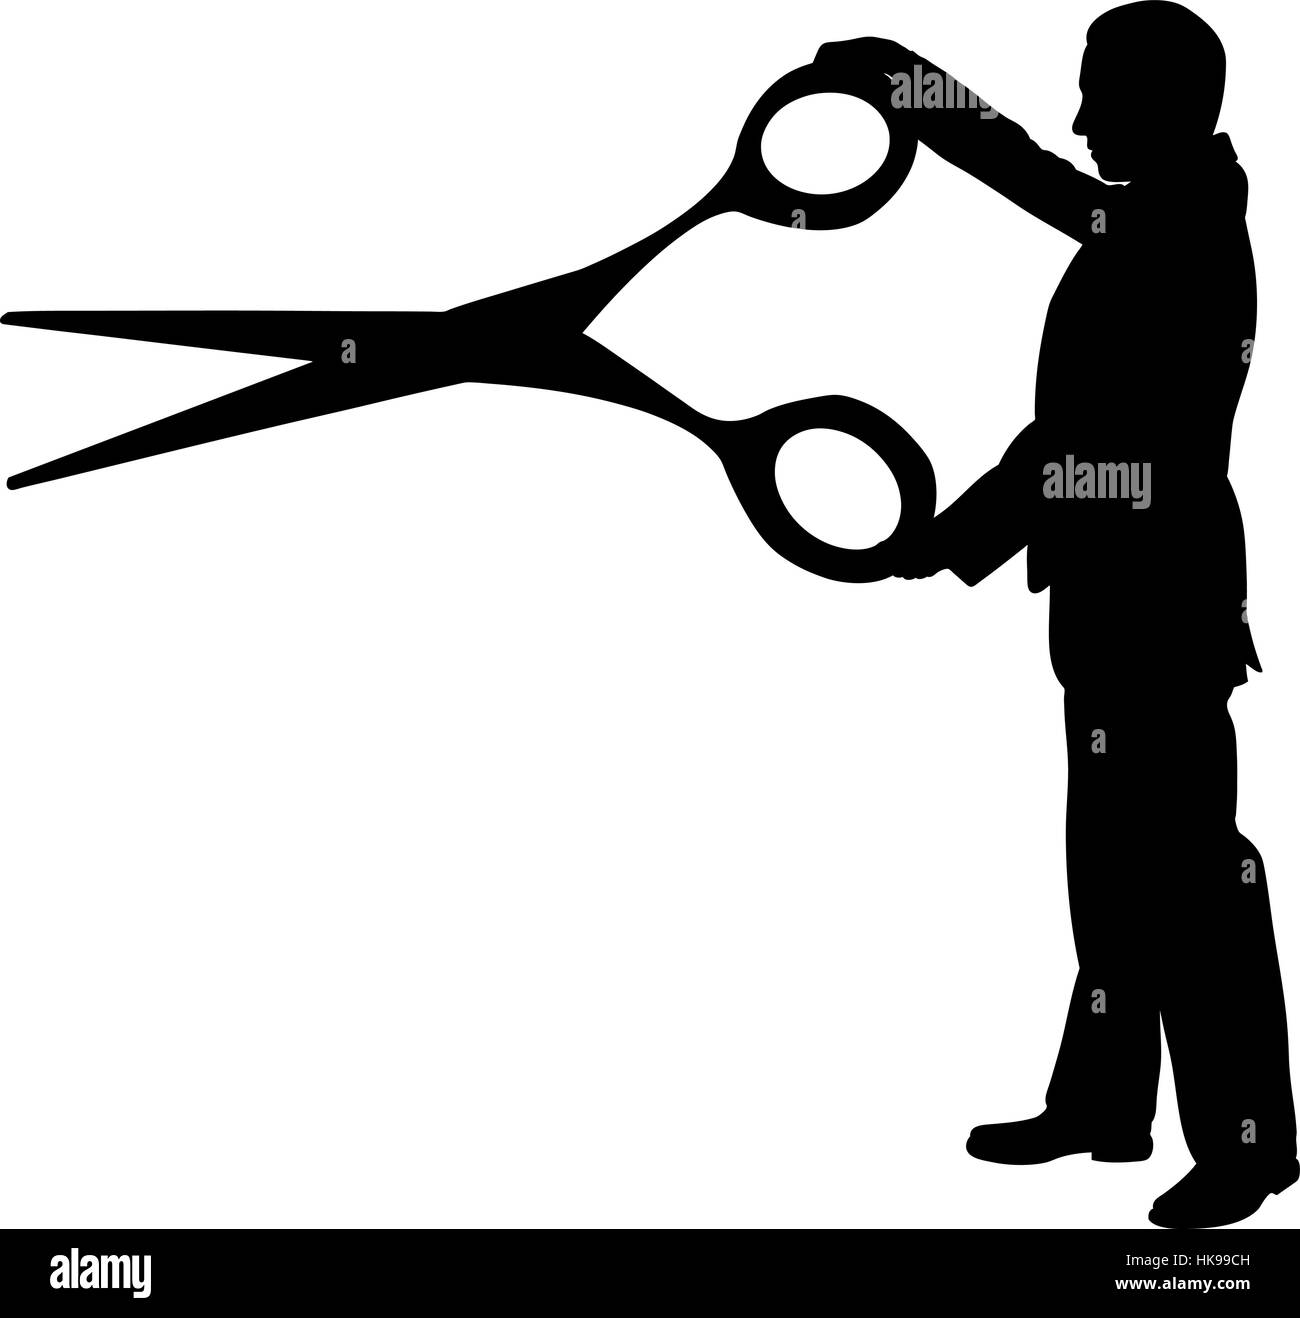 Illustration of man with big scissors Stock Vector